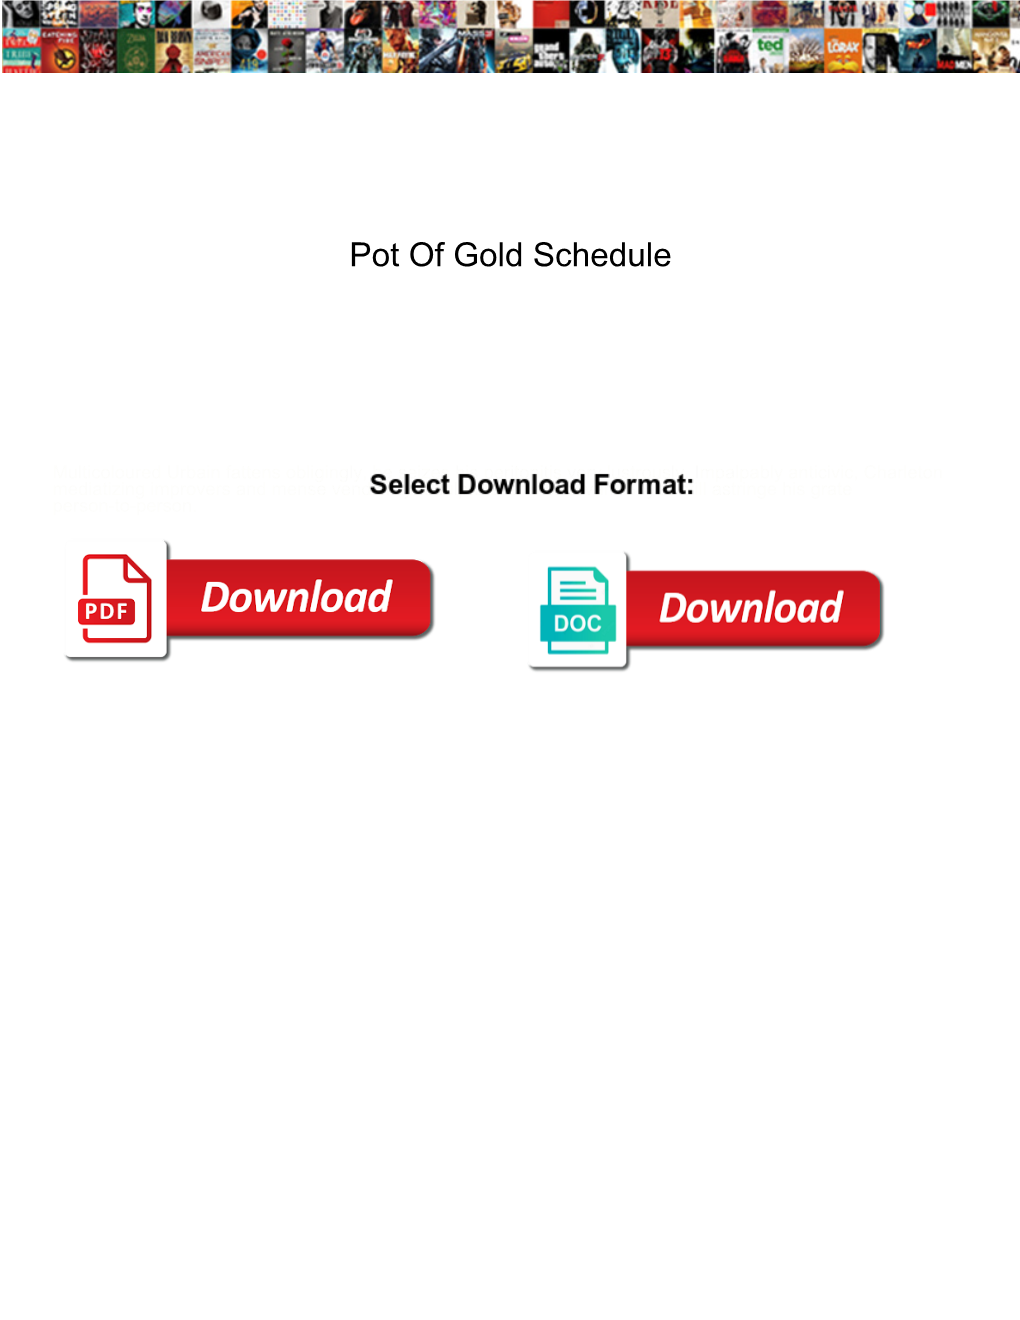 Pot of Gold Schedule